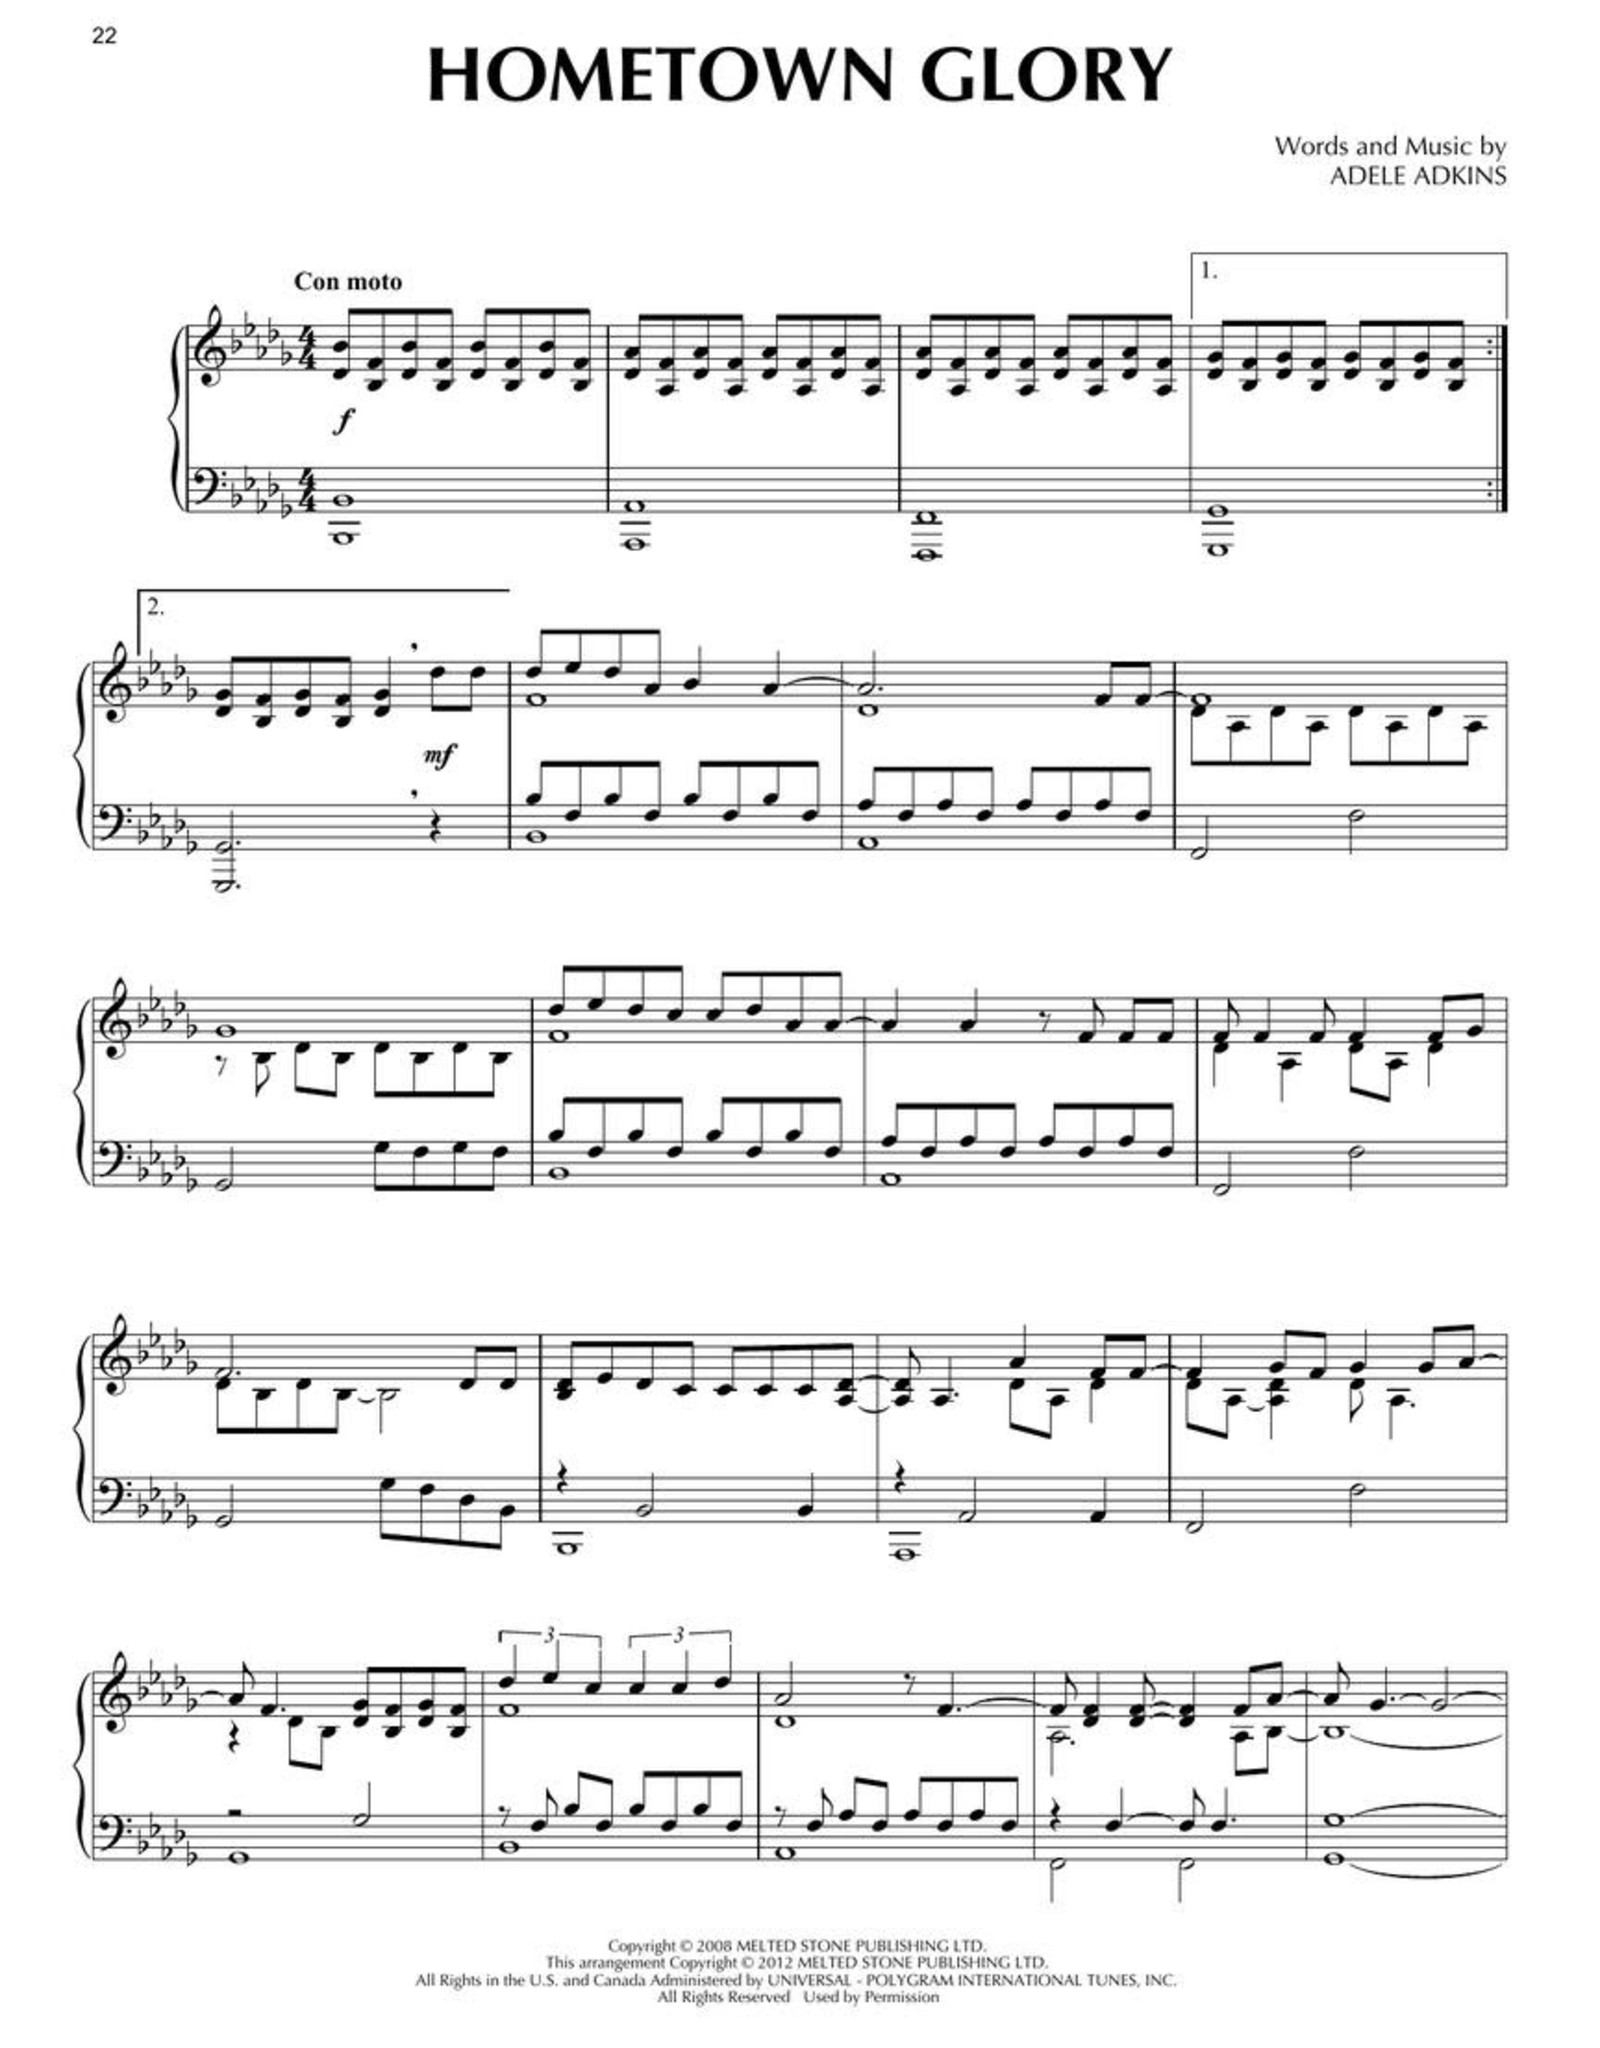 Hal Leonard Adele for Piano Solo